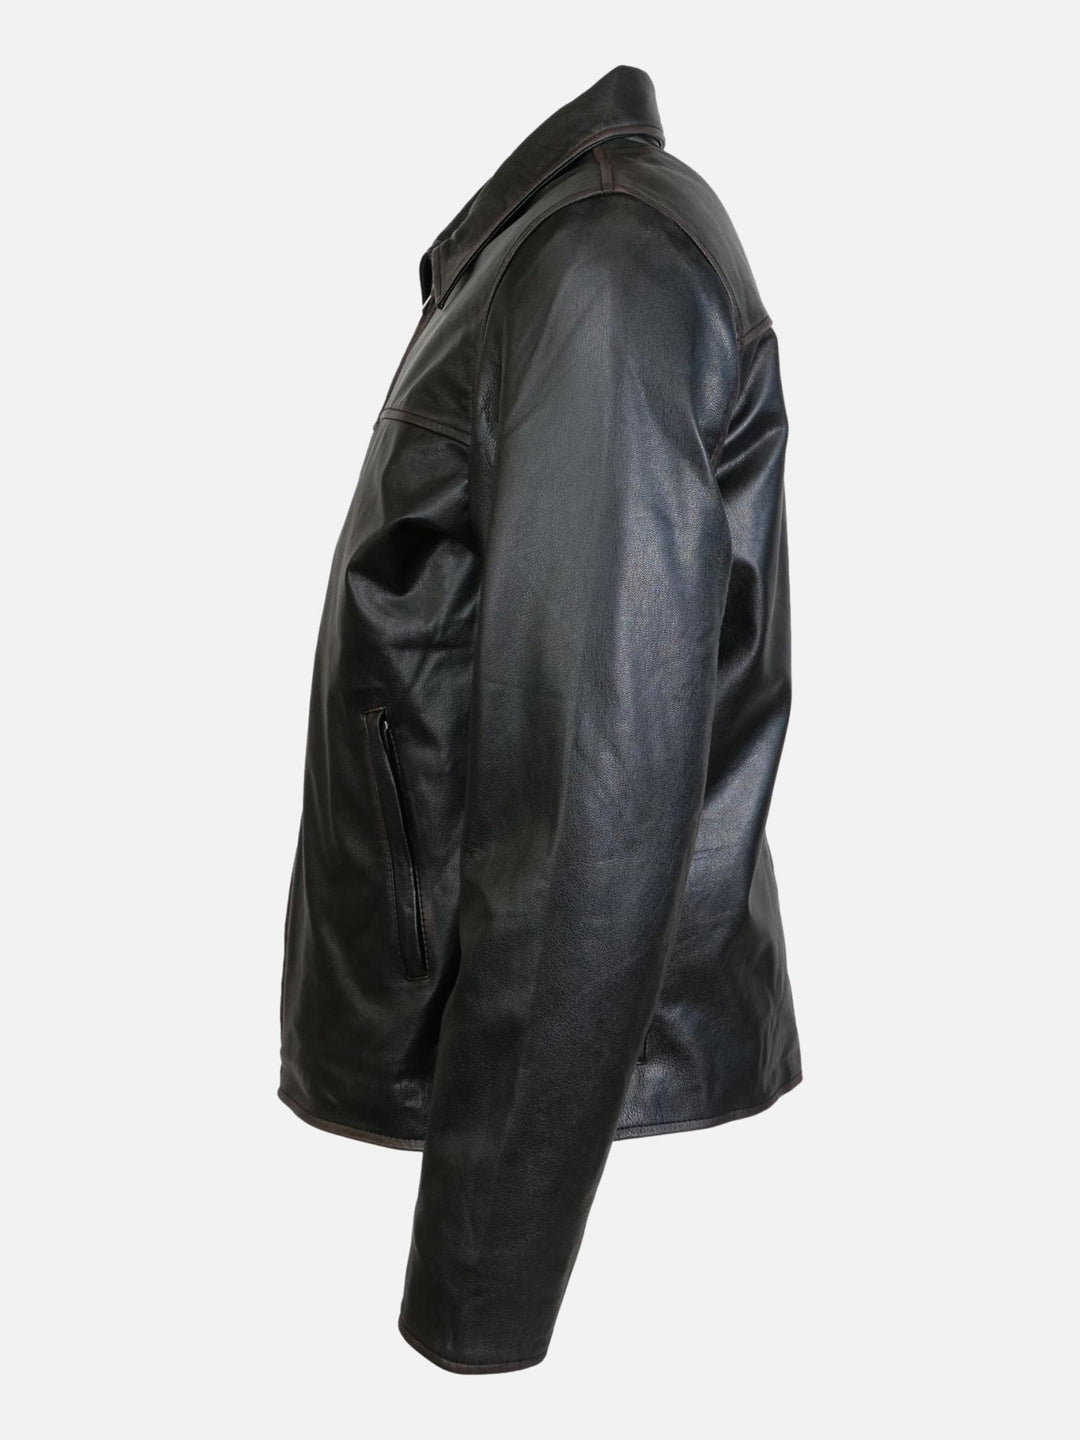 James Dean - Goat Rubbed Off Leather Jacket - Man - Black